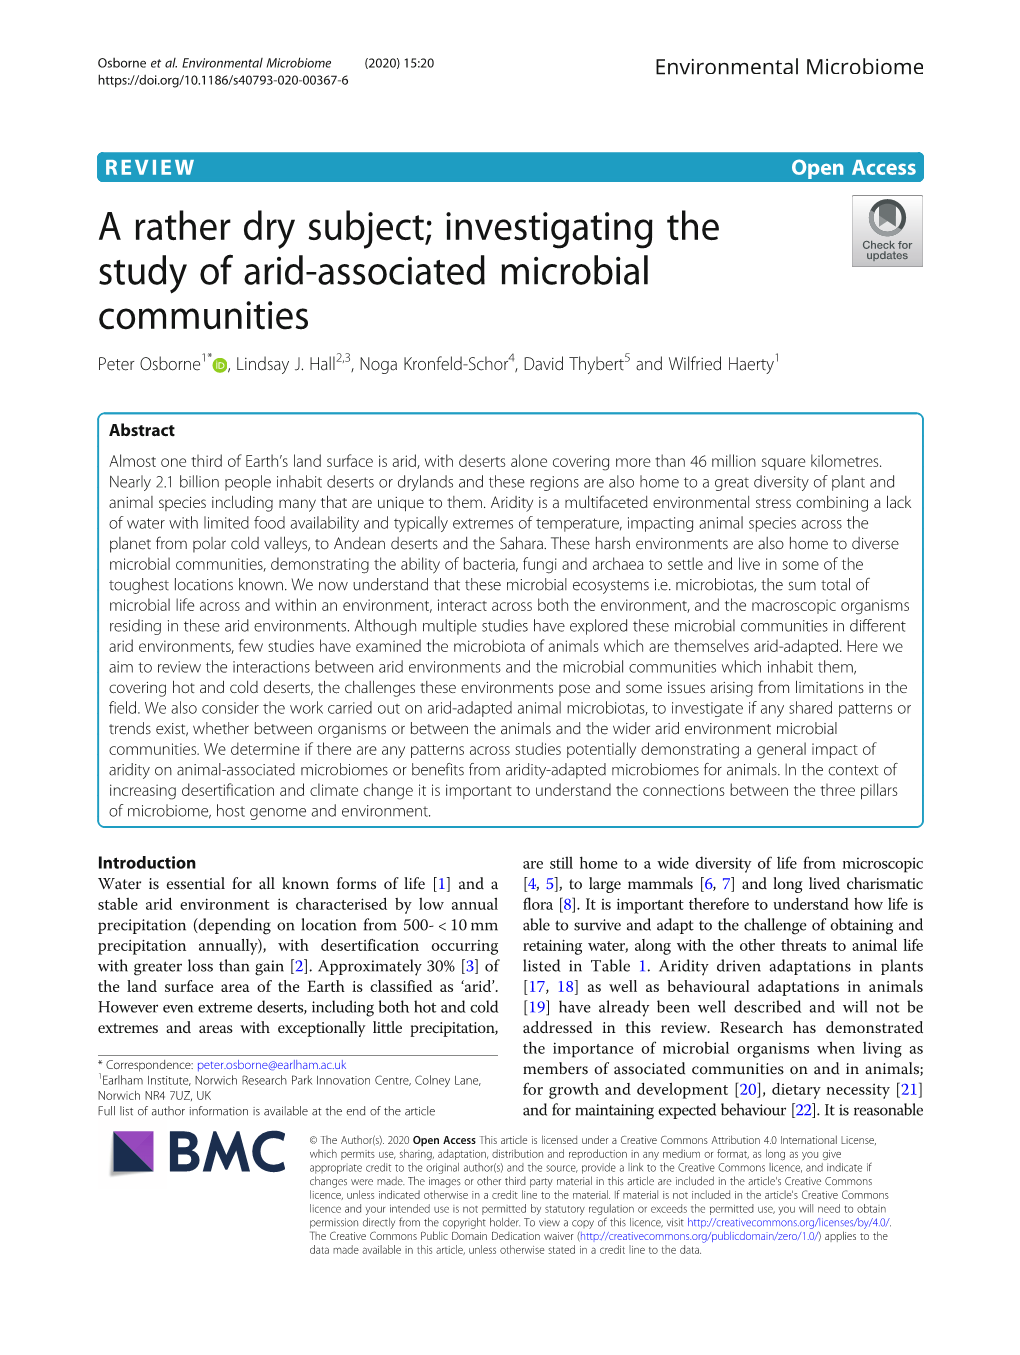 Investigating the Study of Arid-Associated Microbial Communities Peter Osborne1* , Lindsay J